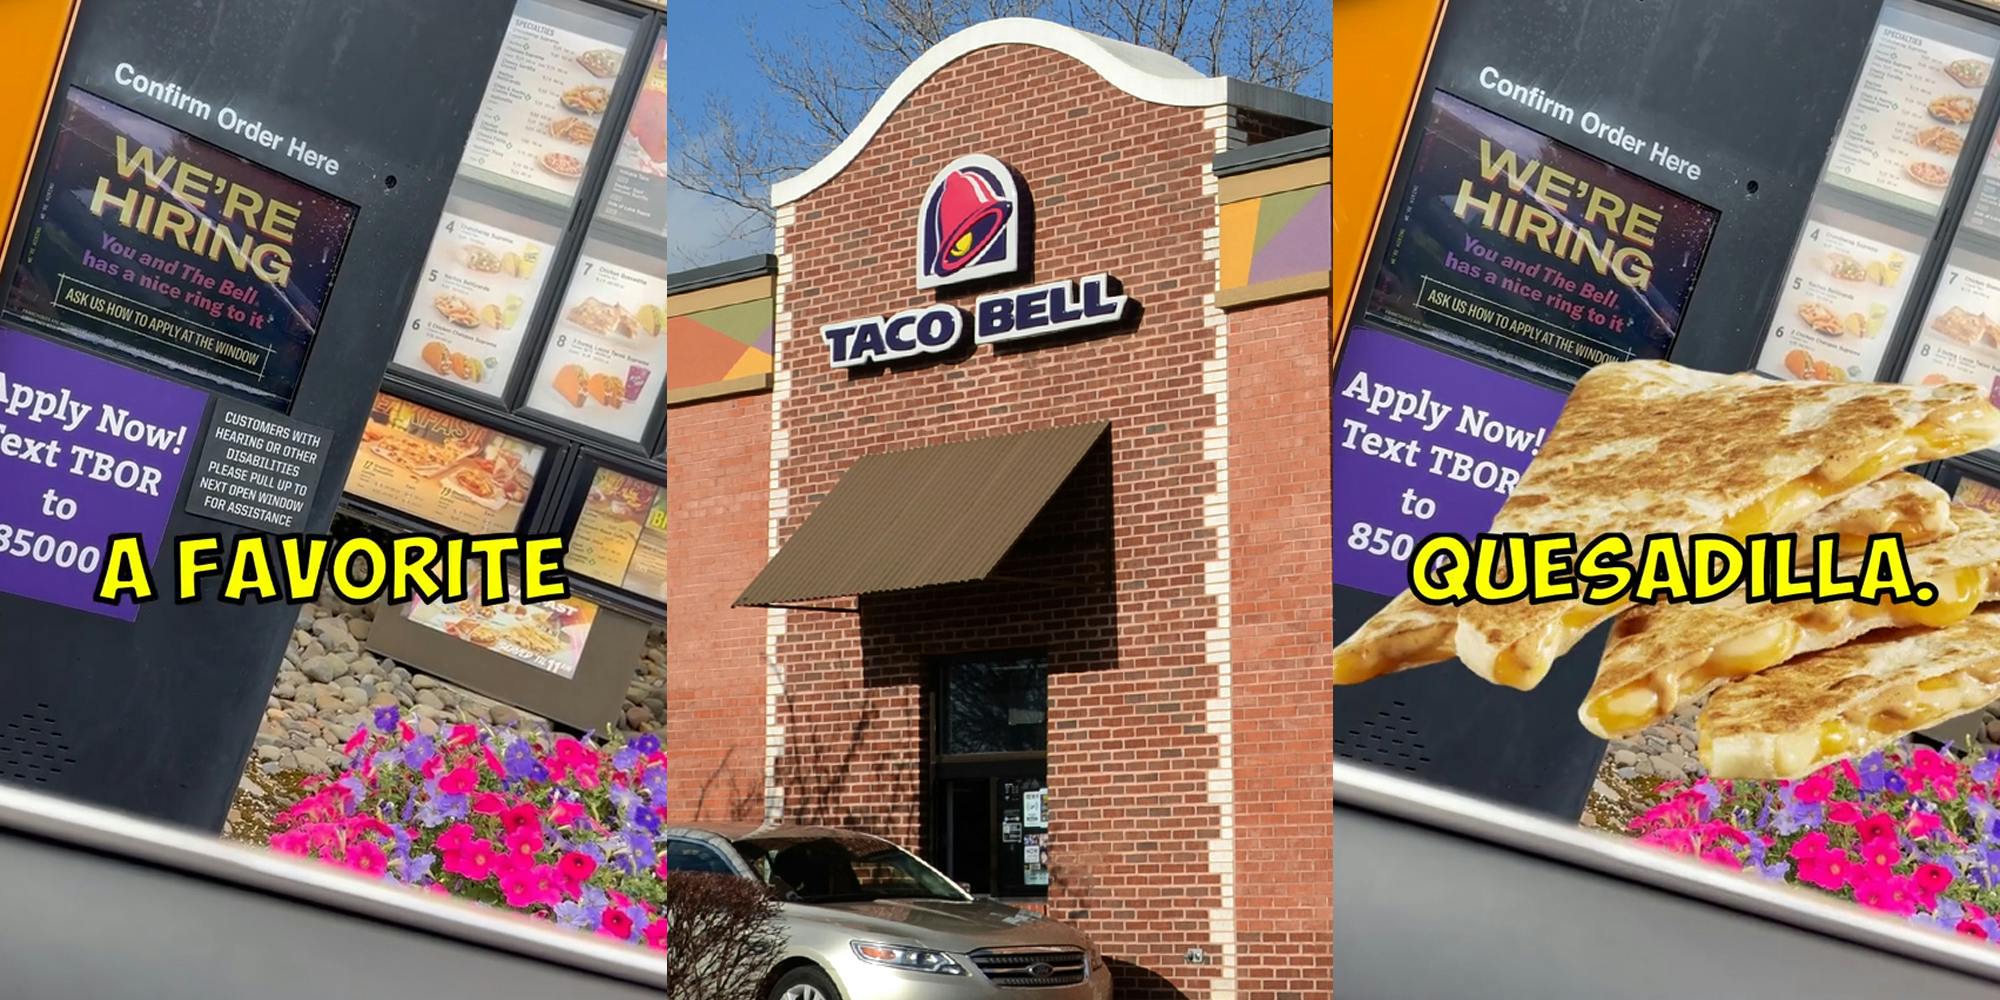 Taco bell drive thru menu with caption "A FAVORITE" (l) Taco Bell drive thru window with sign (c) Taco bell drive thru menu with caption "QUESADILLA." (r)